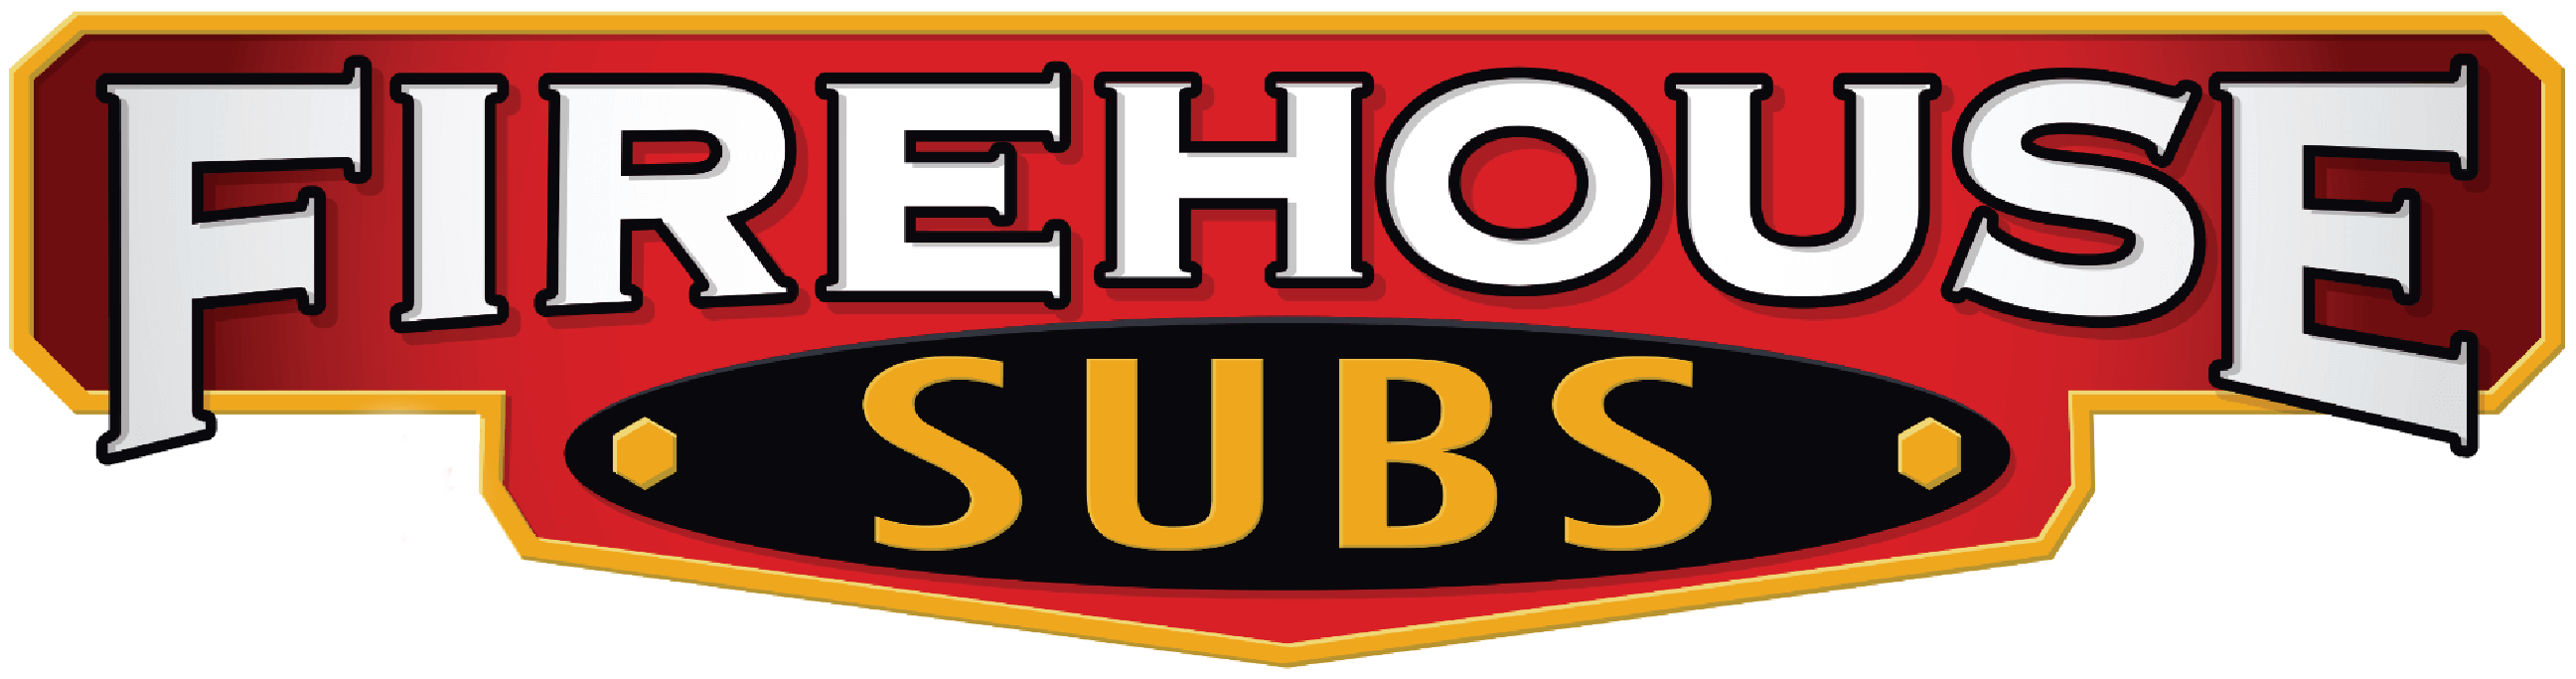 Firehouse Subs Logo 